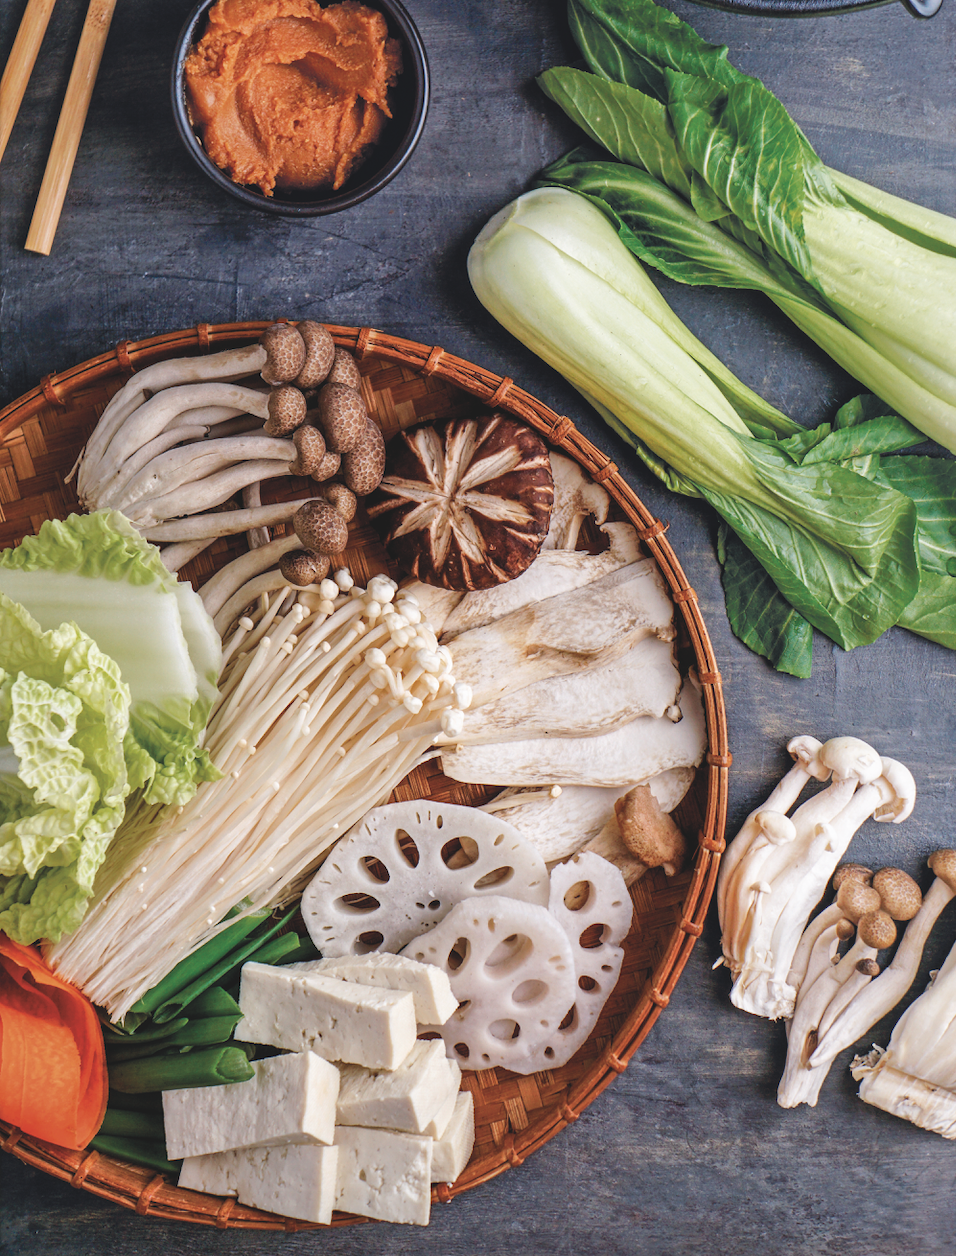 Mixed Mushroom and Vegetable Hot Pot — easypeasyjapanesey